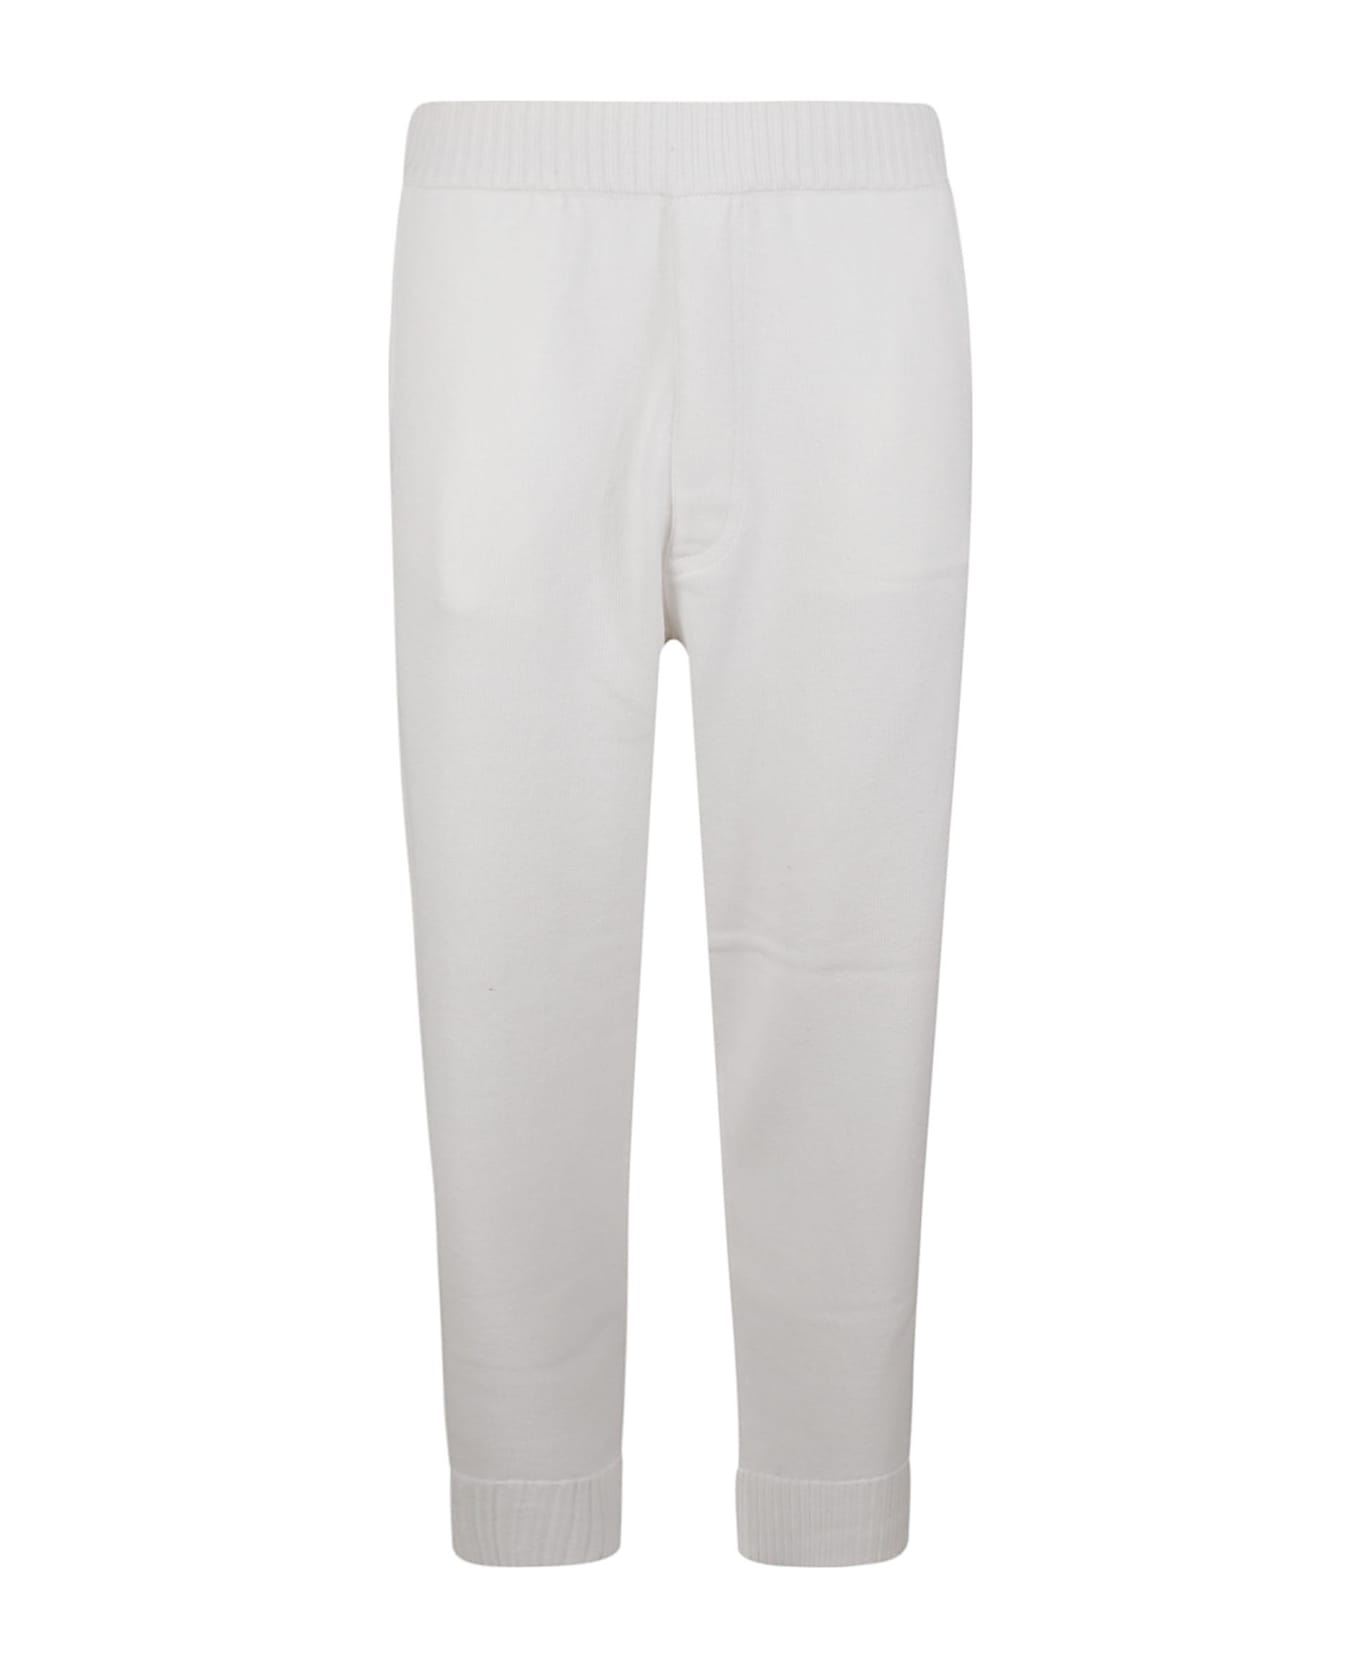 Zegna Ribbed Track Pants - White